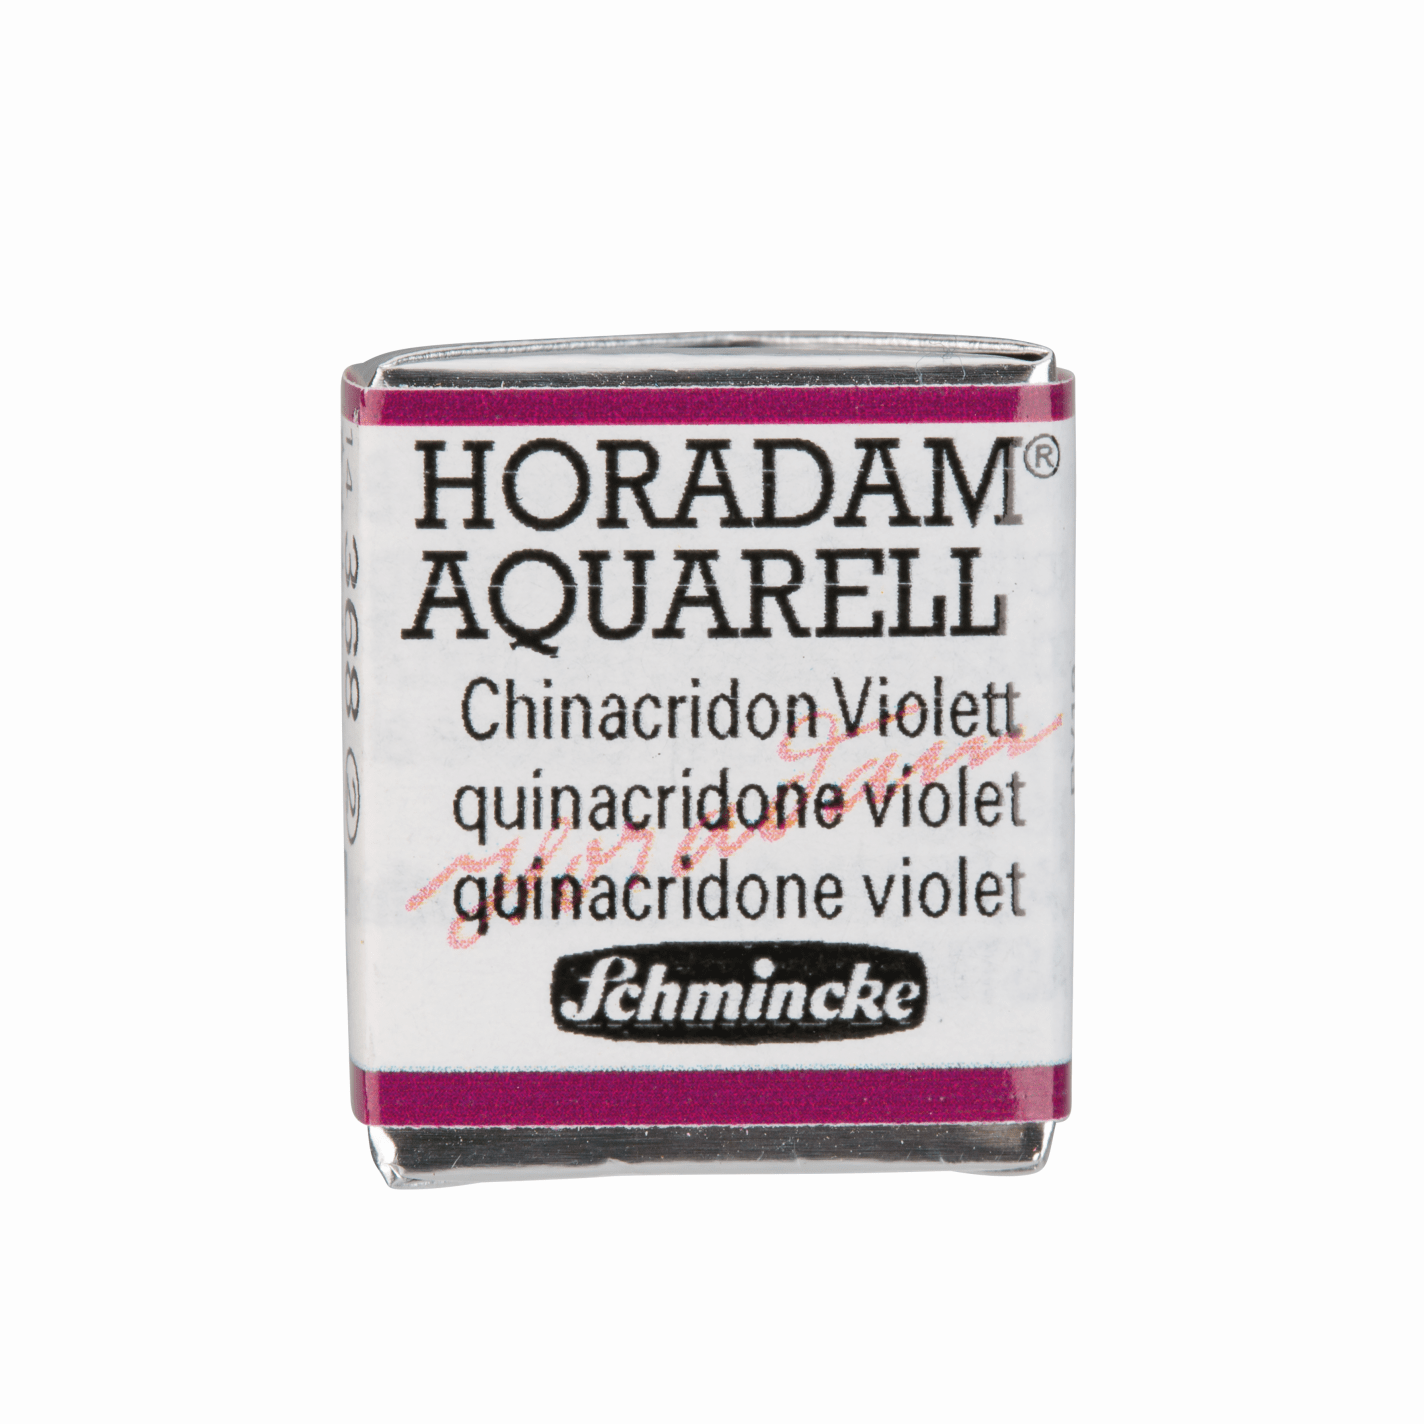 Schmincke Horadam Aquarell pans 1/2 pan Quinacridone Violet